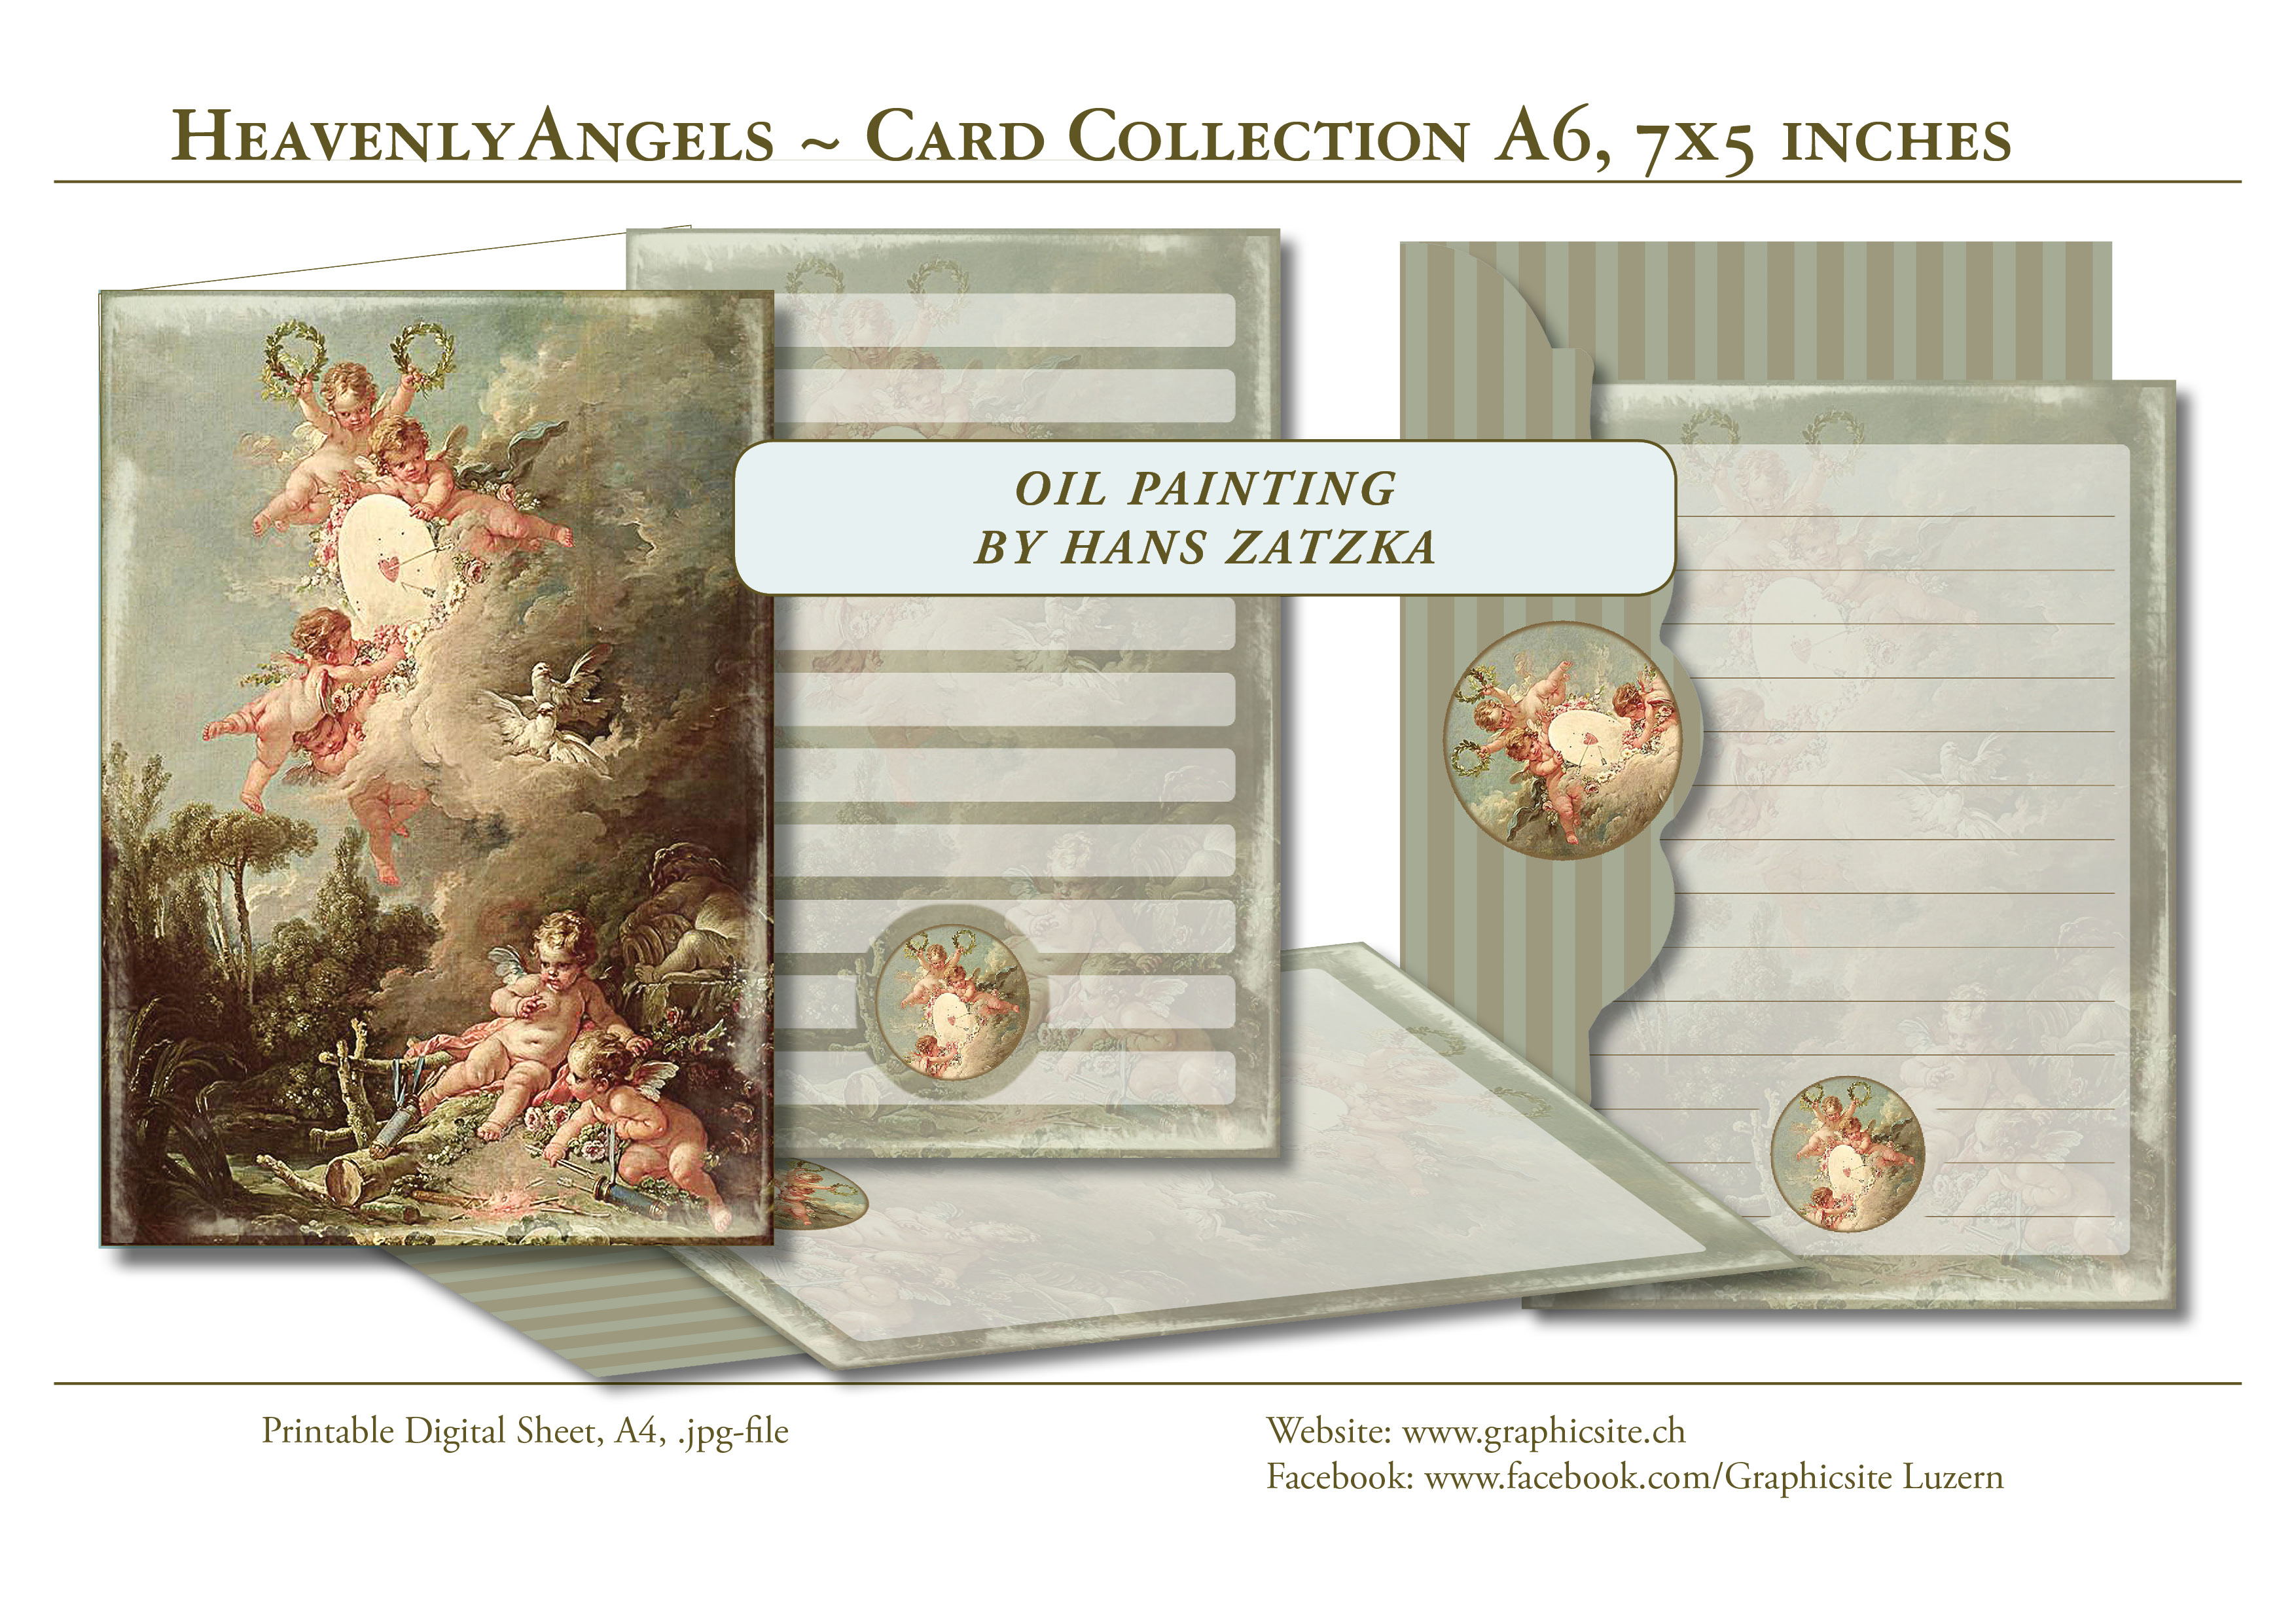 Printable Digital Sheets - Card Collection A6 - Heavenly Angels - Hans Zatzka, ArtPainter, Oil Paintings, Graphic Design, Luzern, 